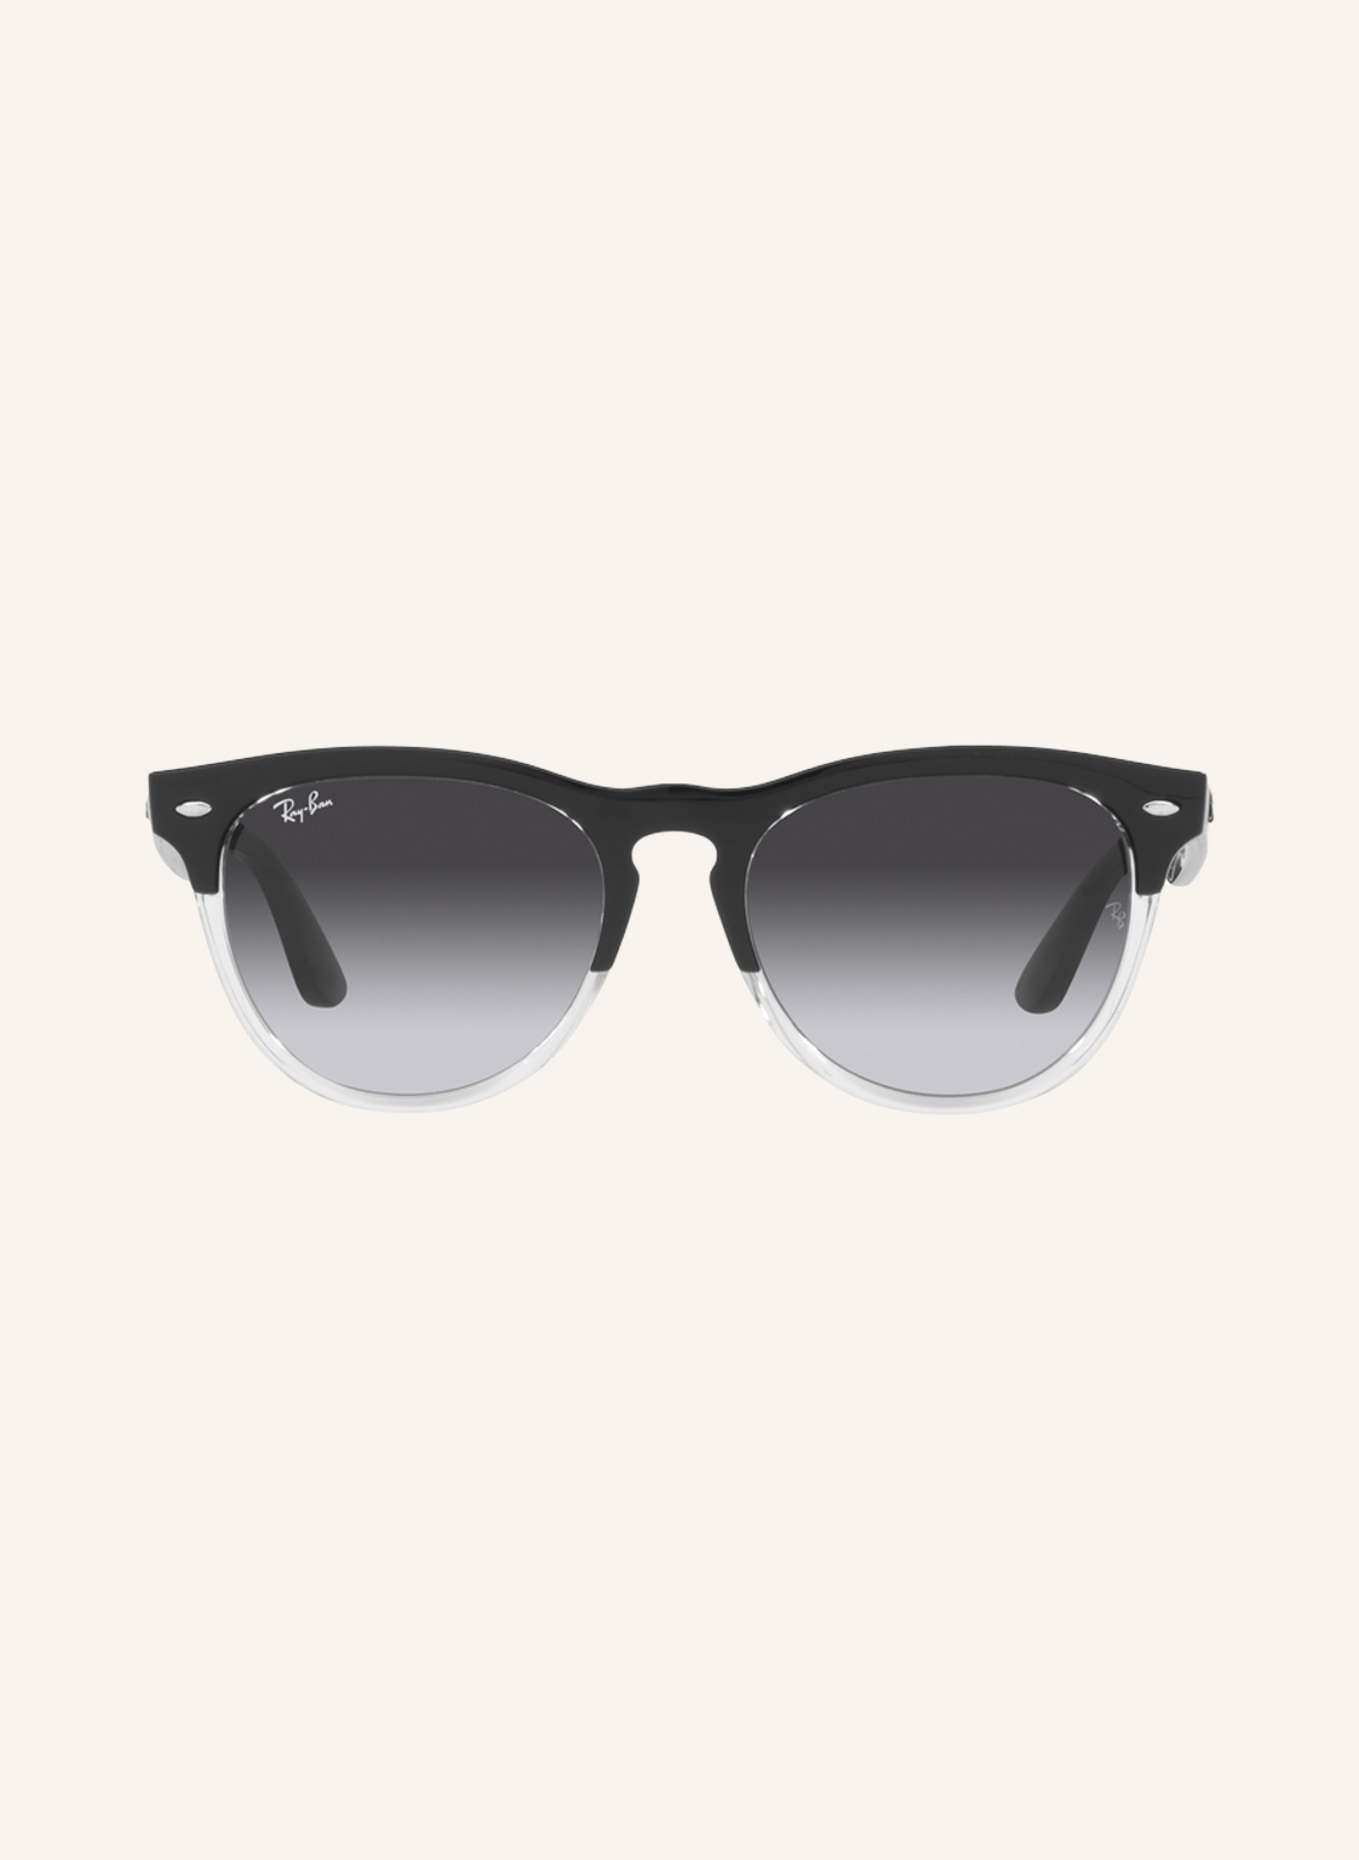 Ikara Tiger Eye (Polarvue® Gray) | Fit over sunglasses, Sunglasses women  fashion, Fashion tips